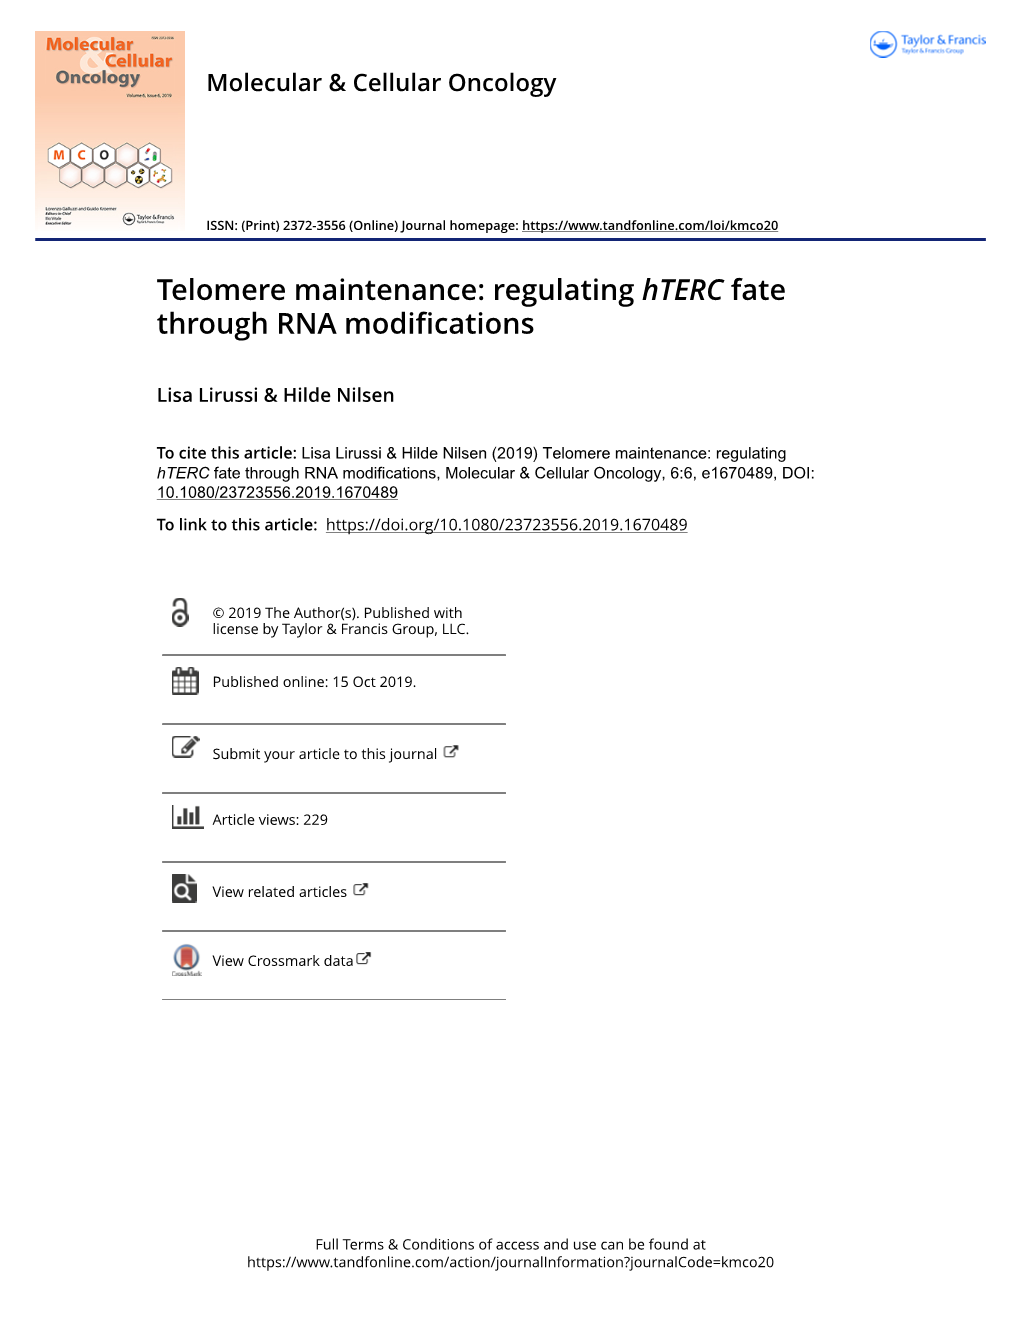 Telomere Maintenance: Regulating Hterc Fate Through RNA Modifications